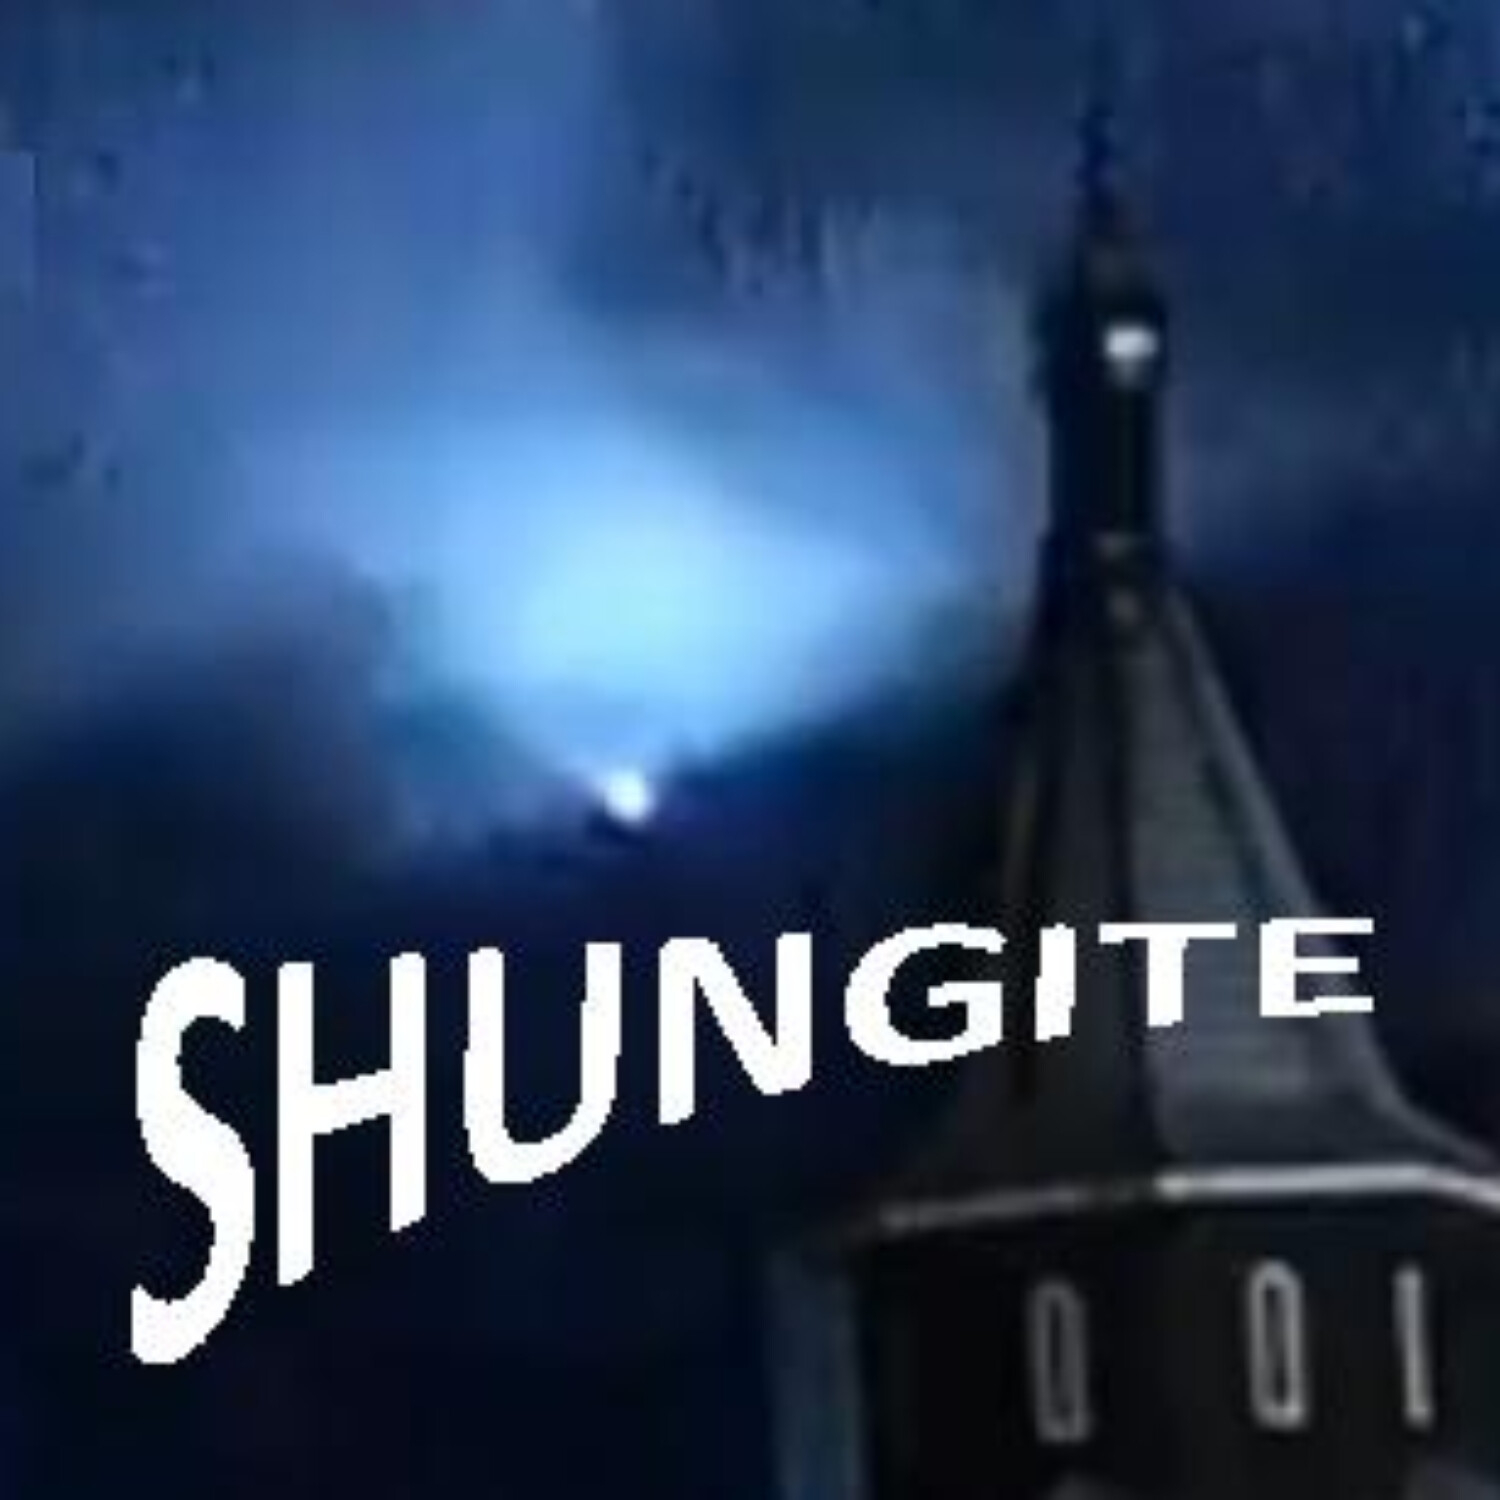 "SHUNGITE REALITY” 12/28/21 - Shungite, 5G, Covid Connections